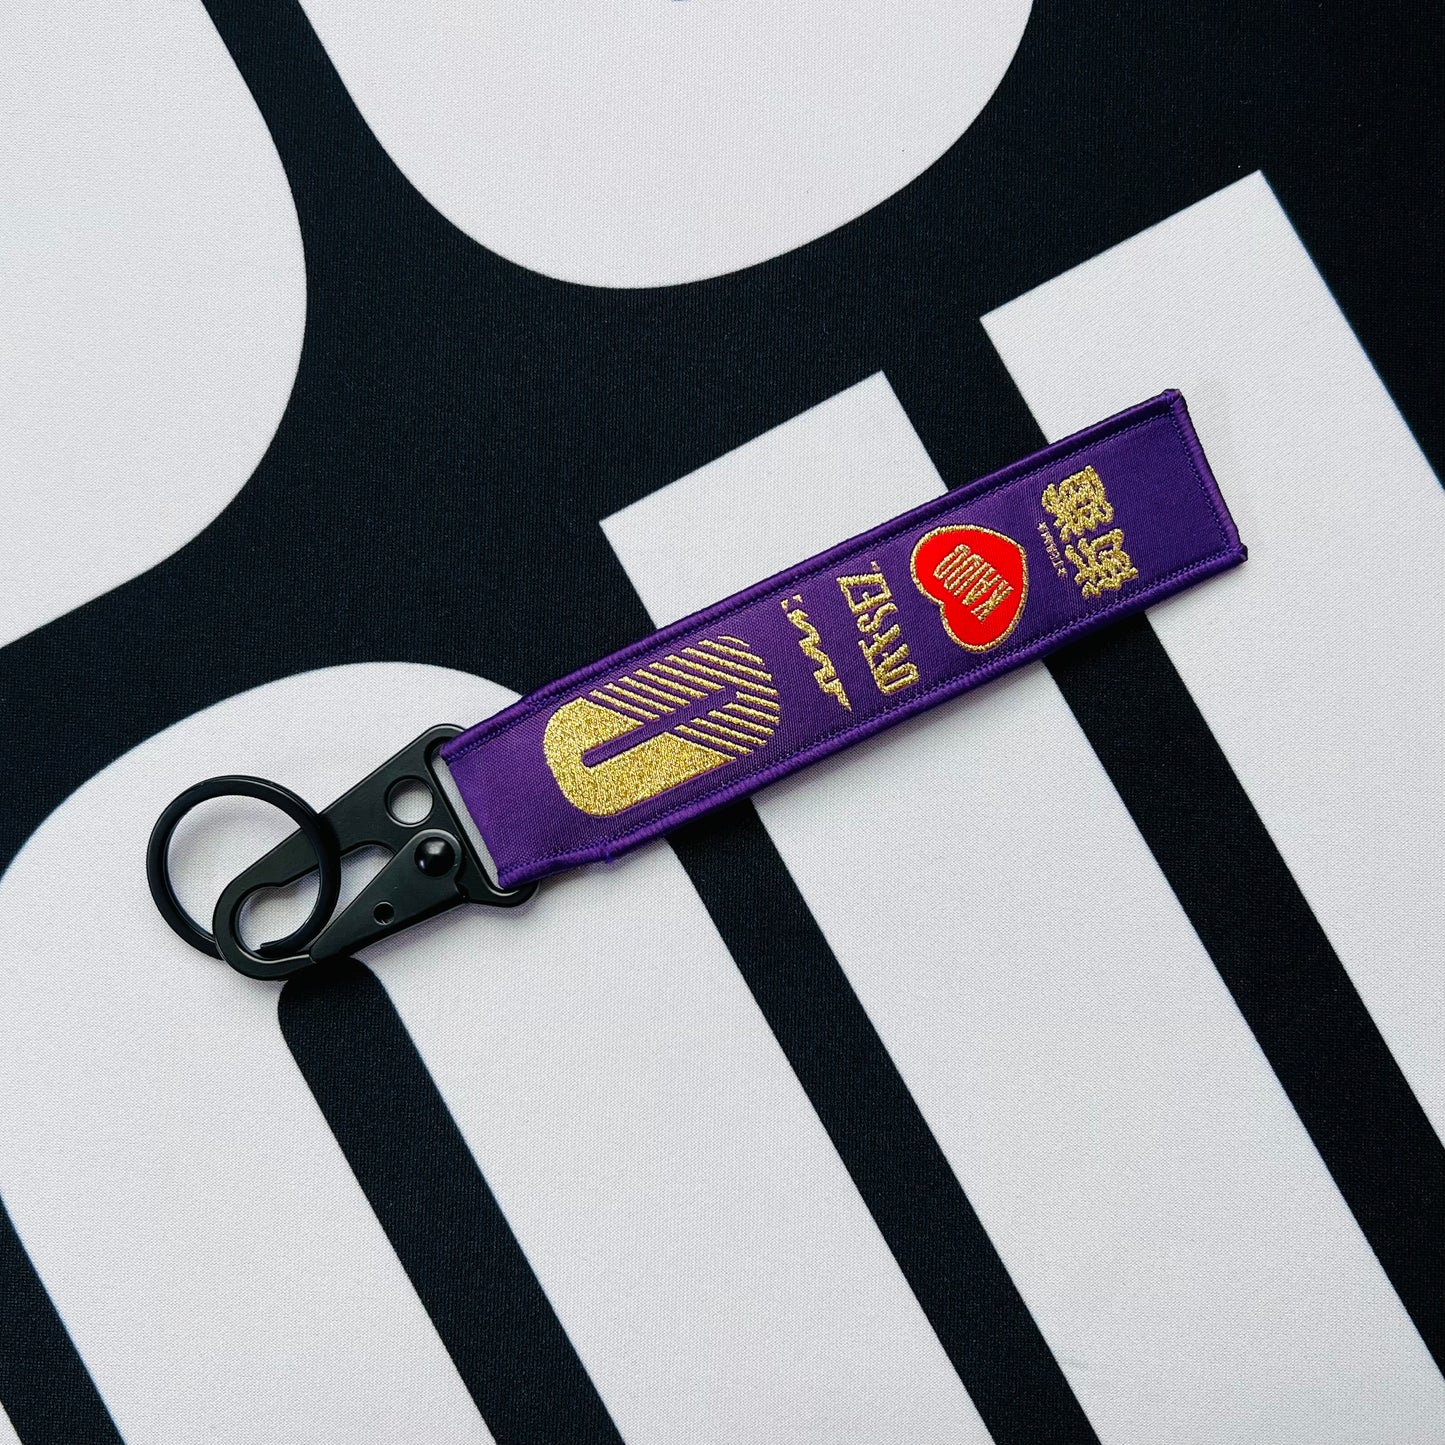 Kaido House jet tag keychain, purple